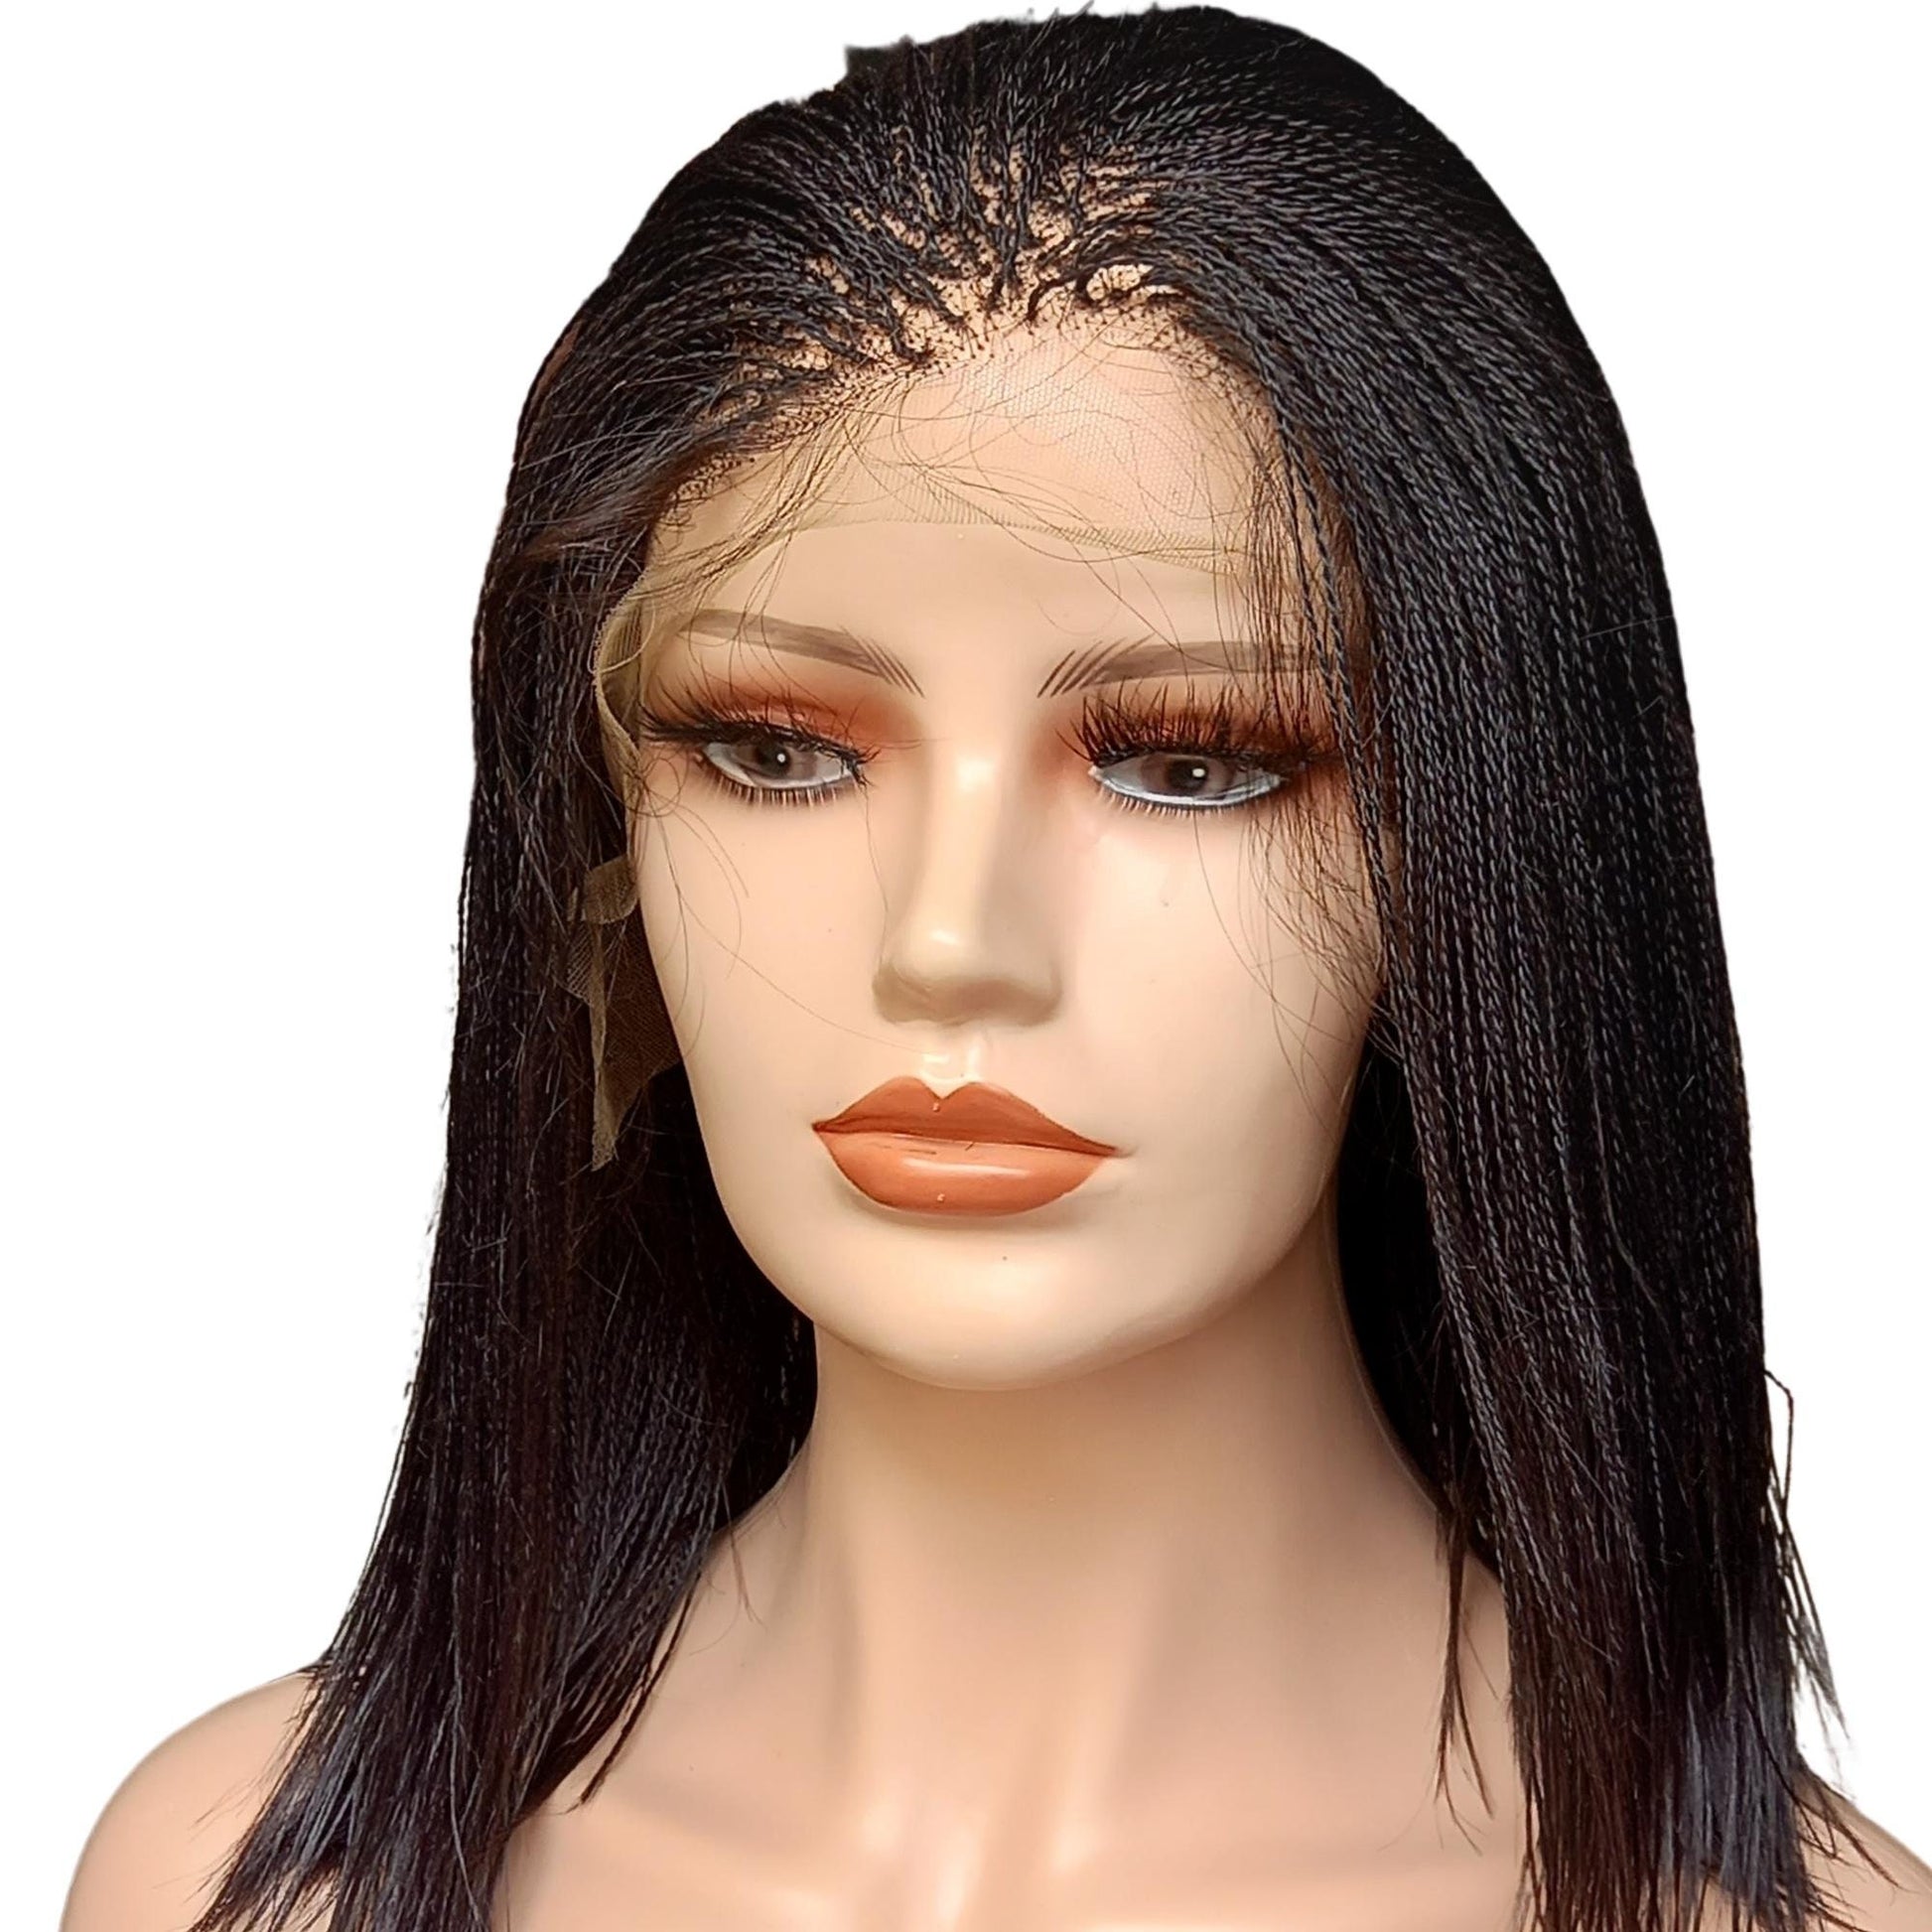 2 in 1 set of braided wigs, micro million braid wig, knotless braid wig, cheap box braid synthetic braid wigs, braided wigs for black women - BRAIDED WIG BOSS